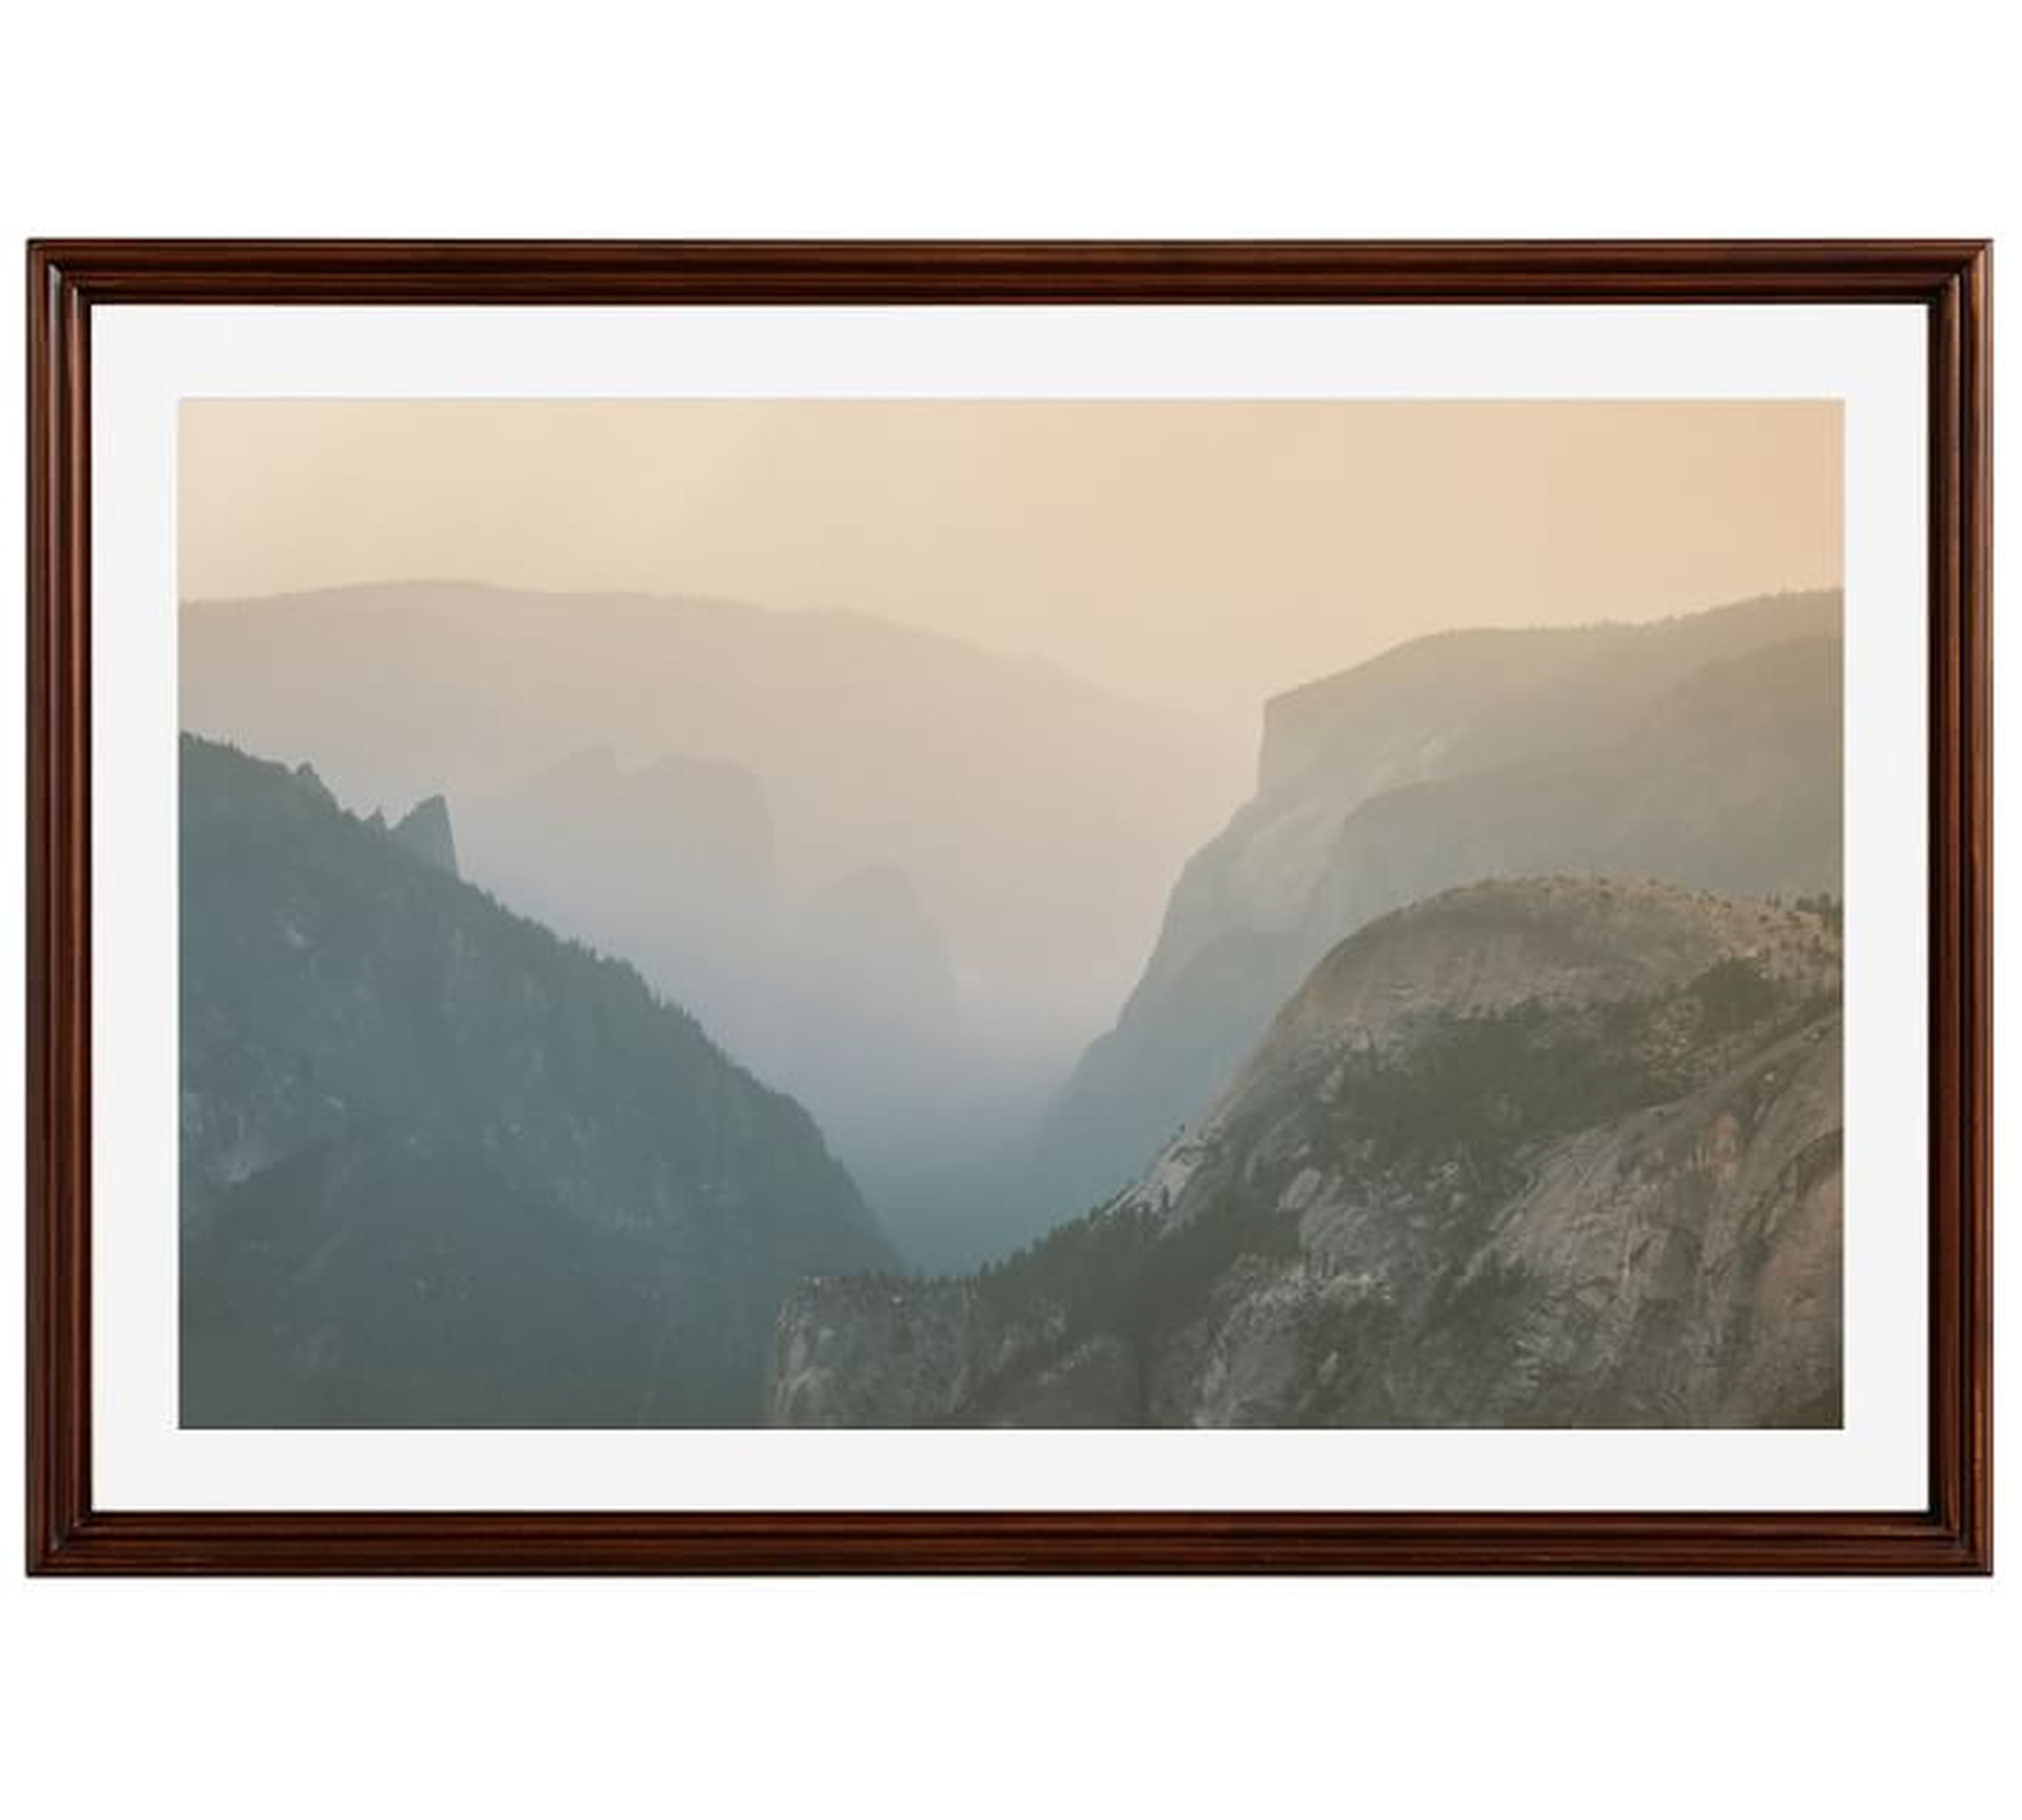 Yosemite at Last Light Framed Print By Camrin Dengel, 28x42", Wood Gallery Frame, Black, Mat - Pottery Barn